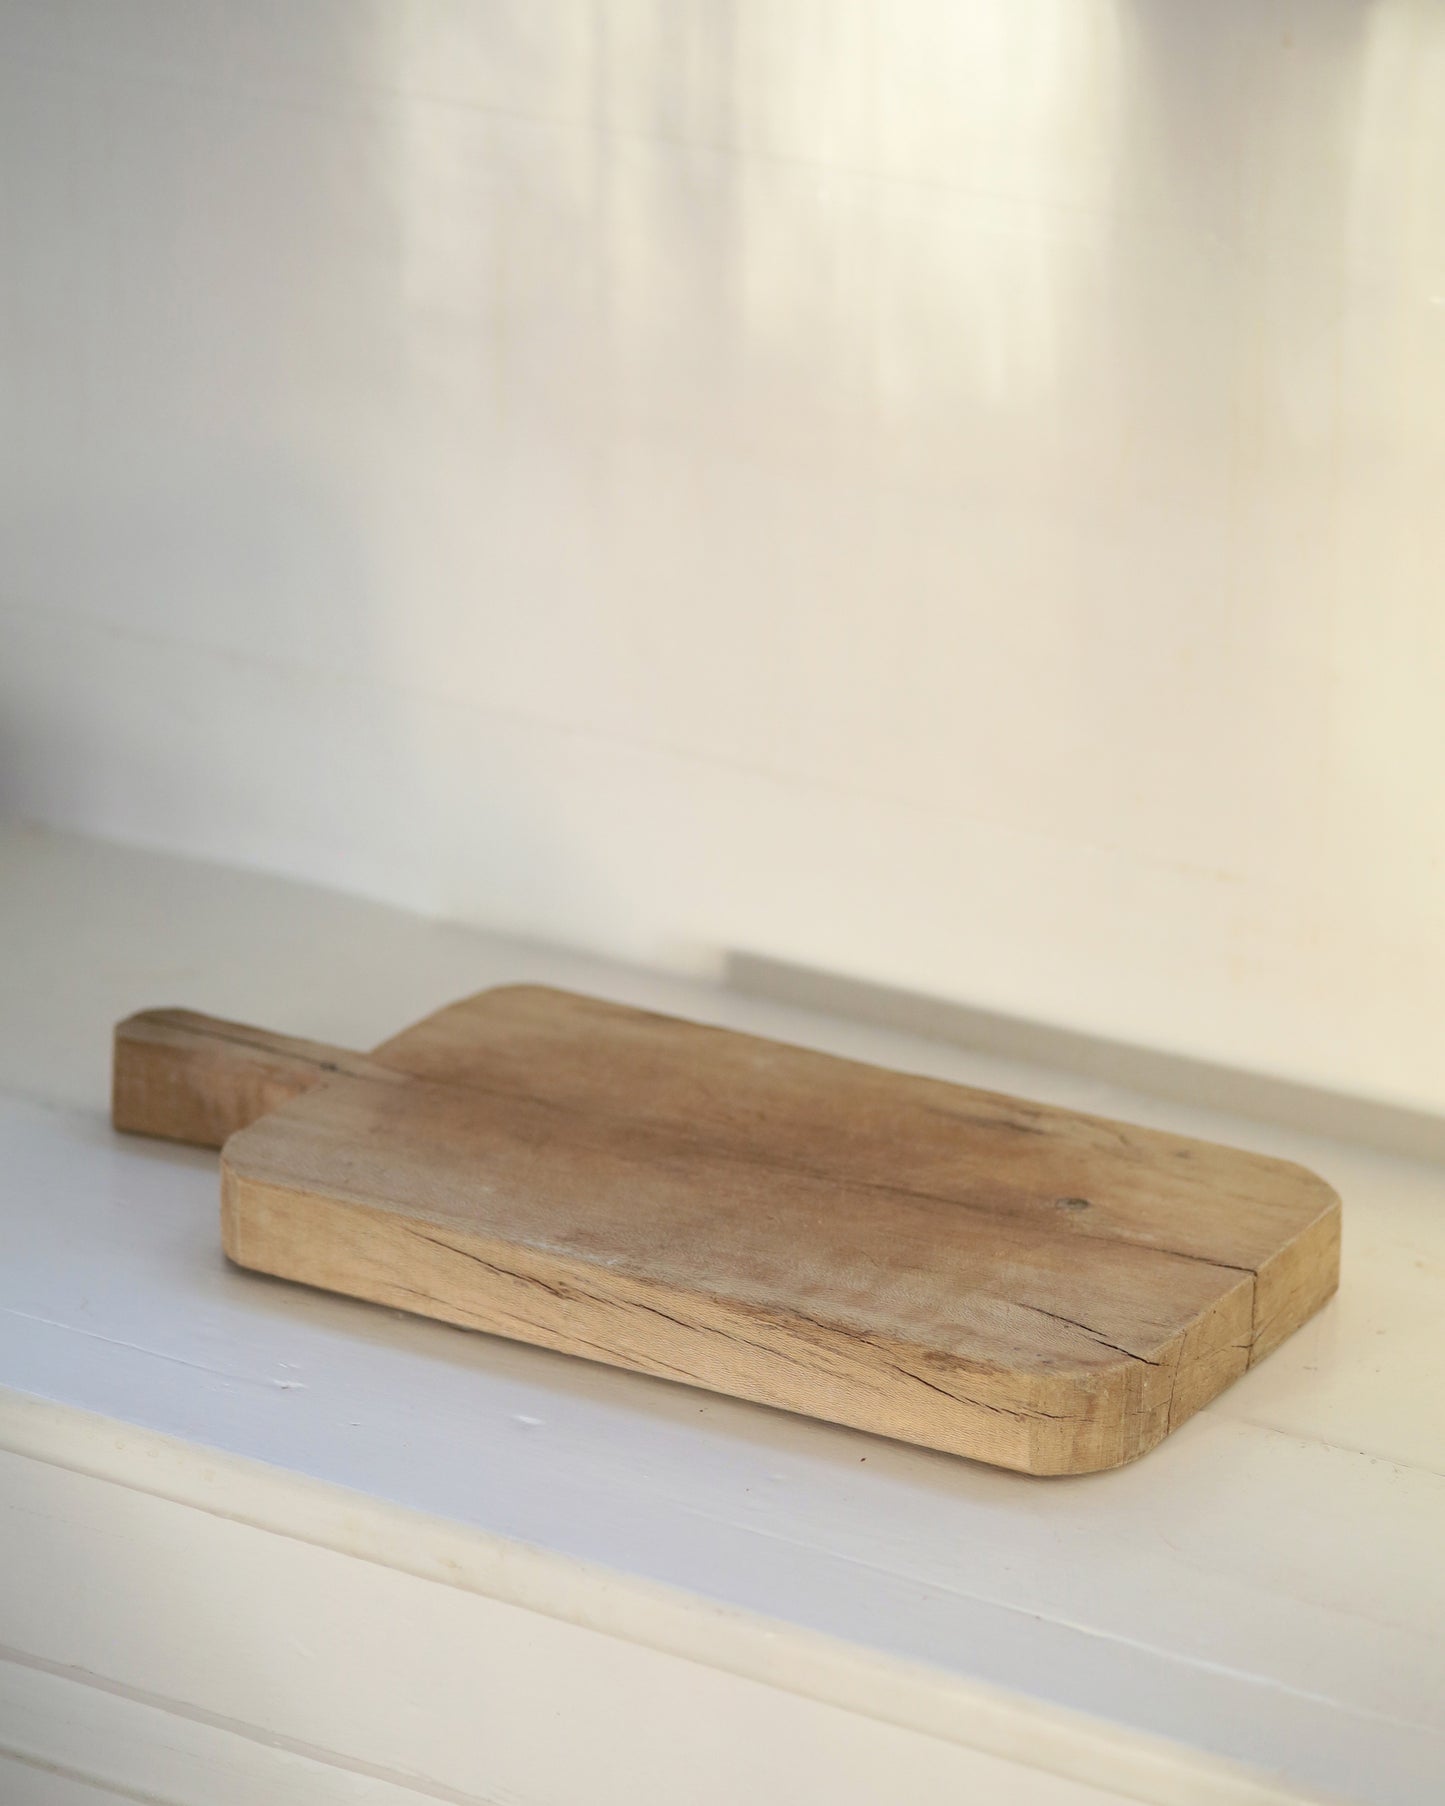 Pale wood antique serving board